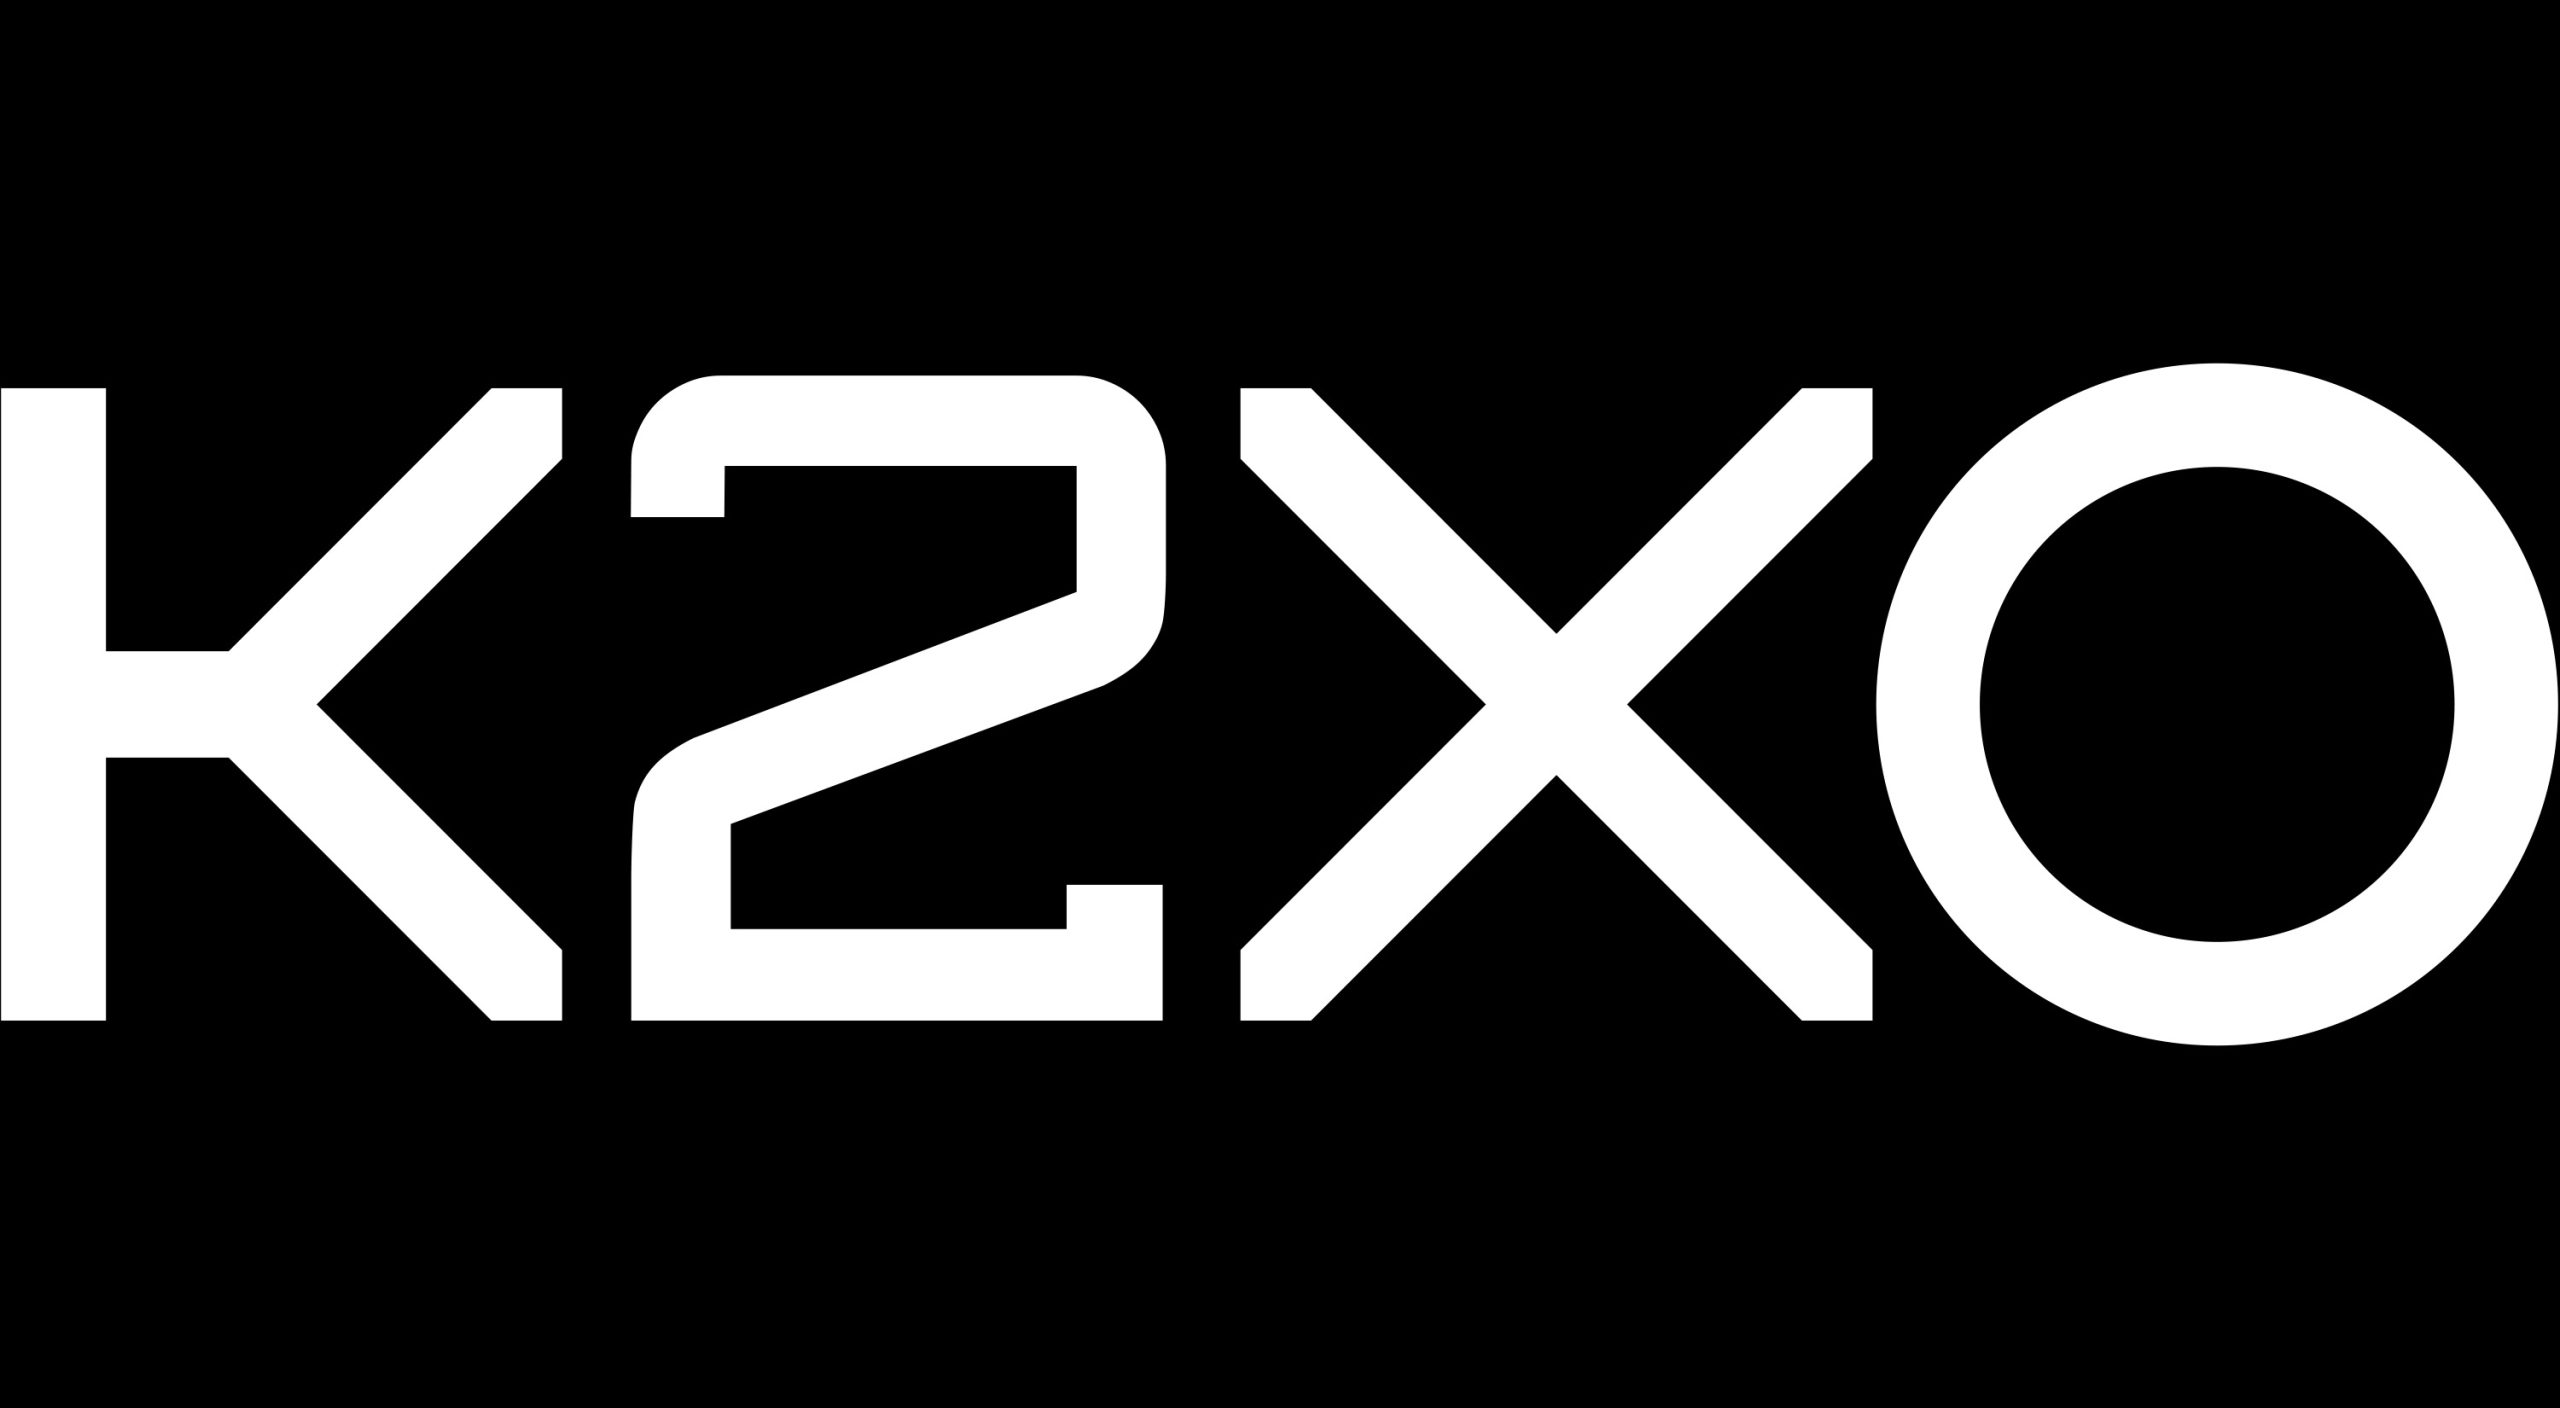 hyperposition-k2xo-logo-visual-identity